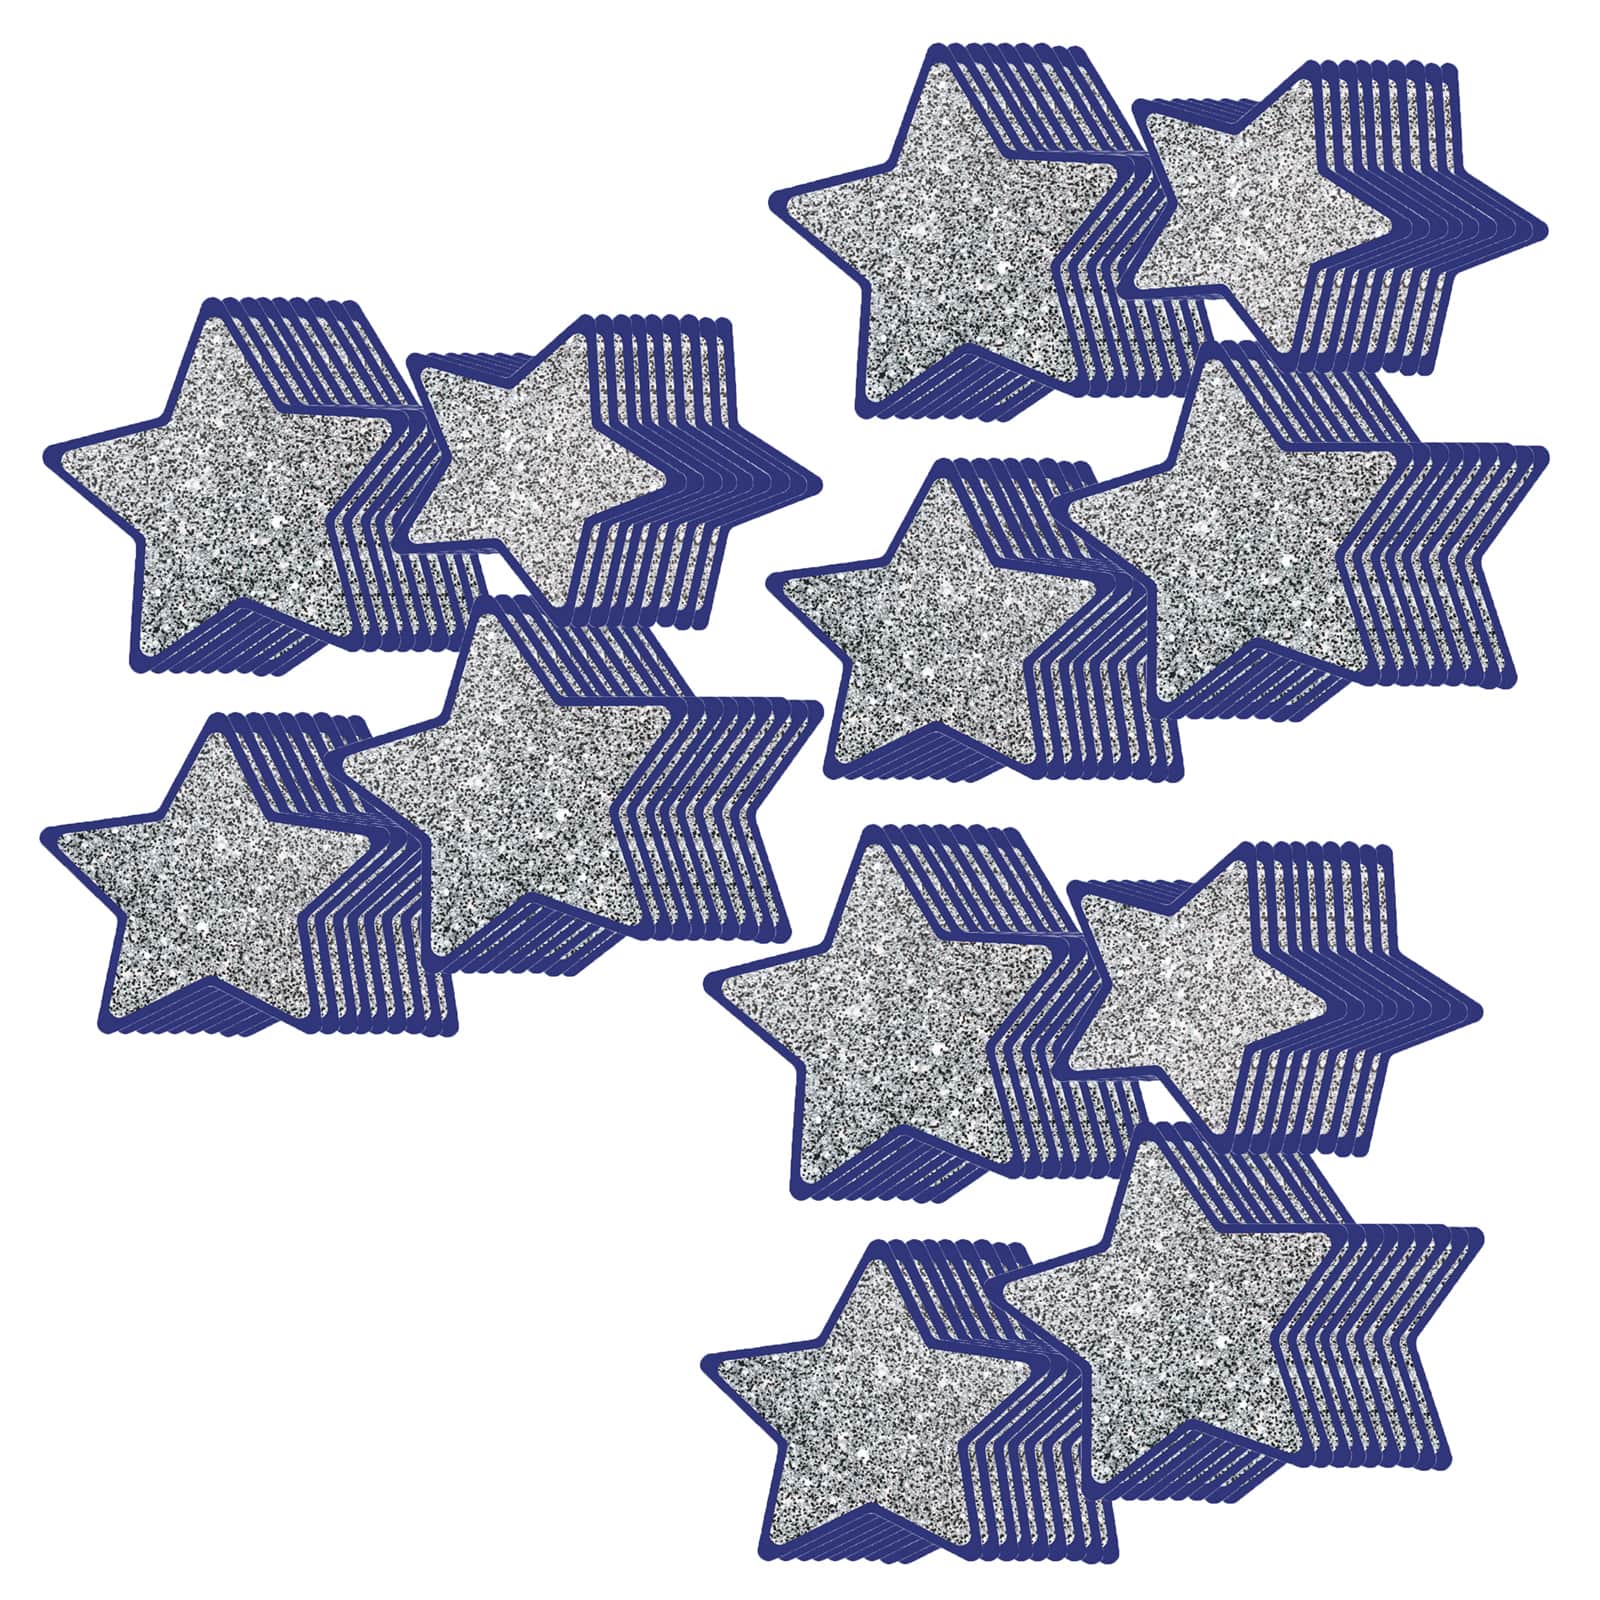 Get The Carson Dellosa Education® Sparkle And Shine Solid Silver Glitter Stars Cut Outs 3 Packs 